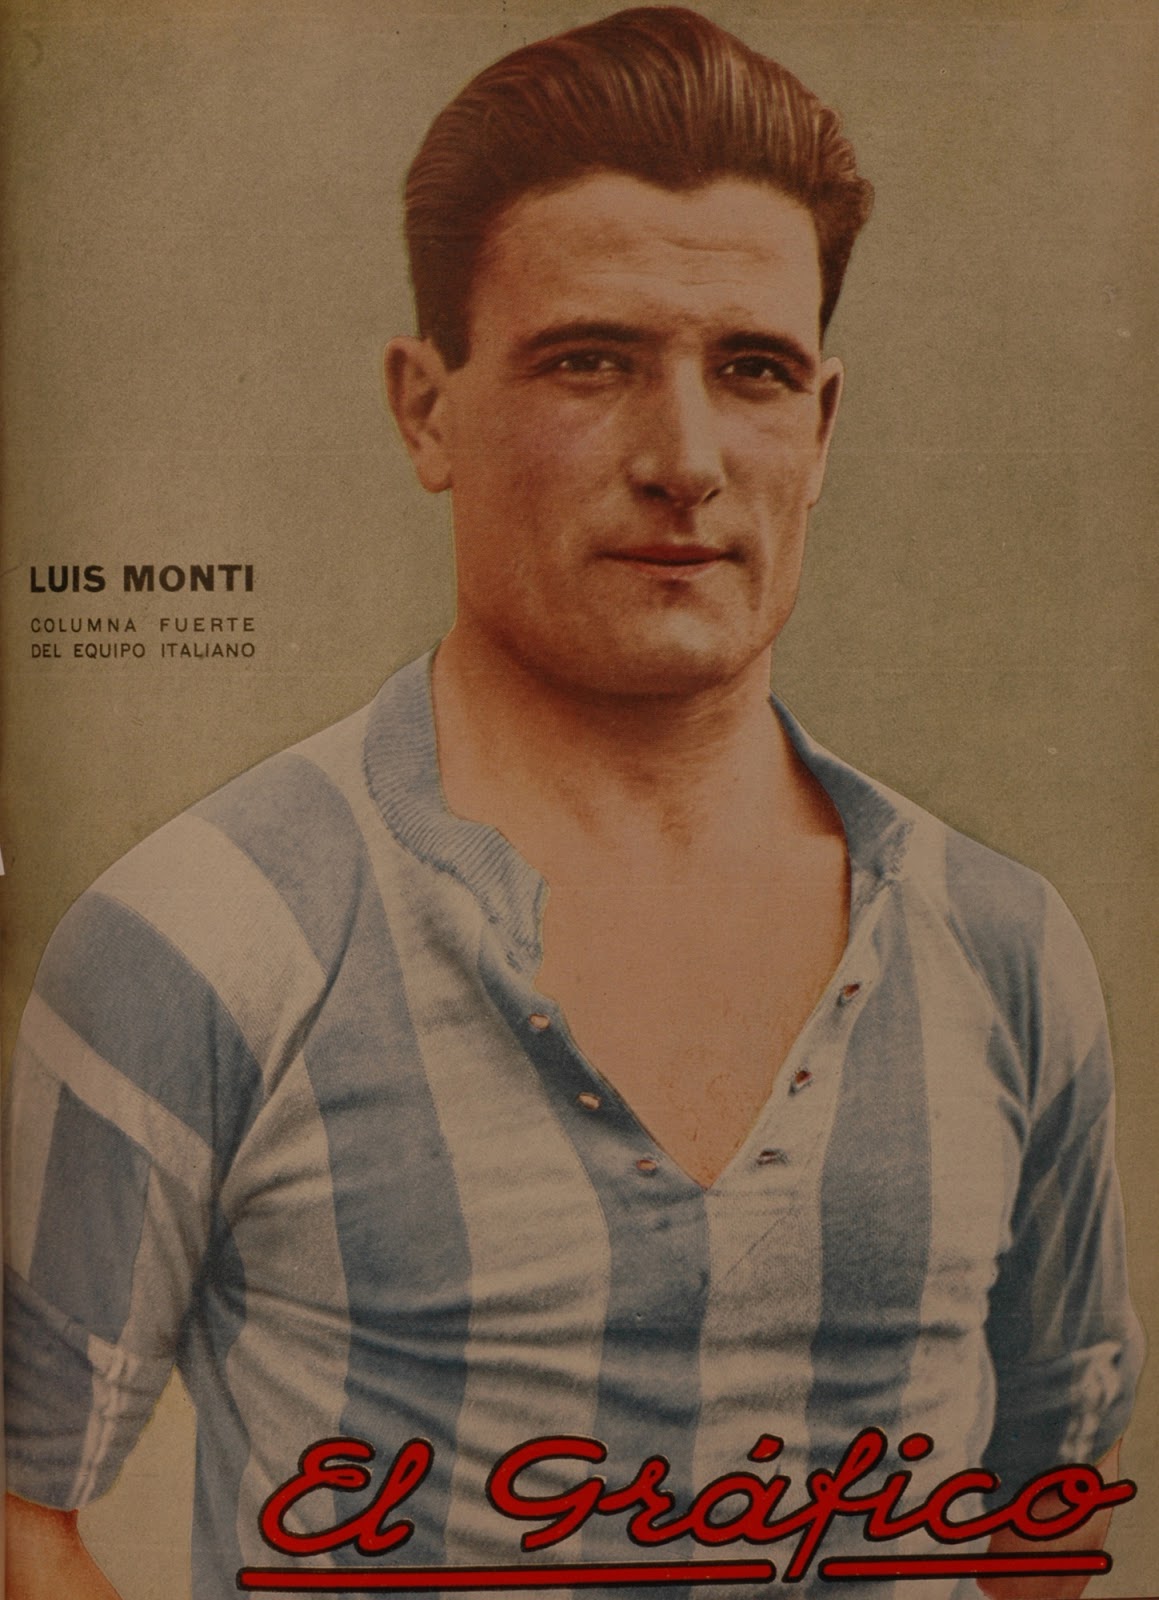 Luis Monti